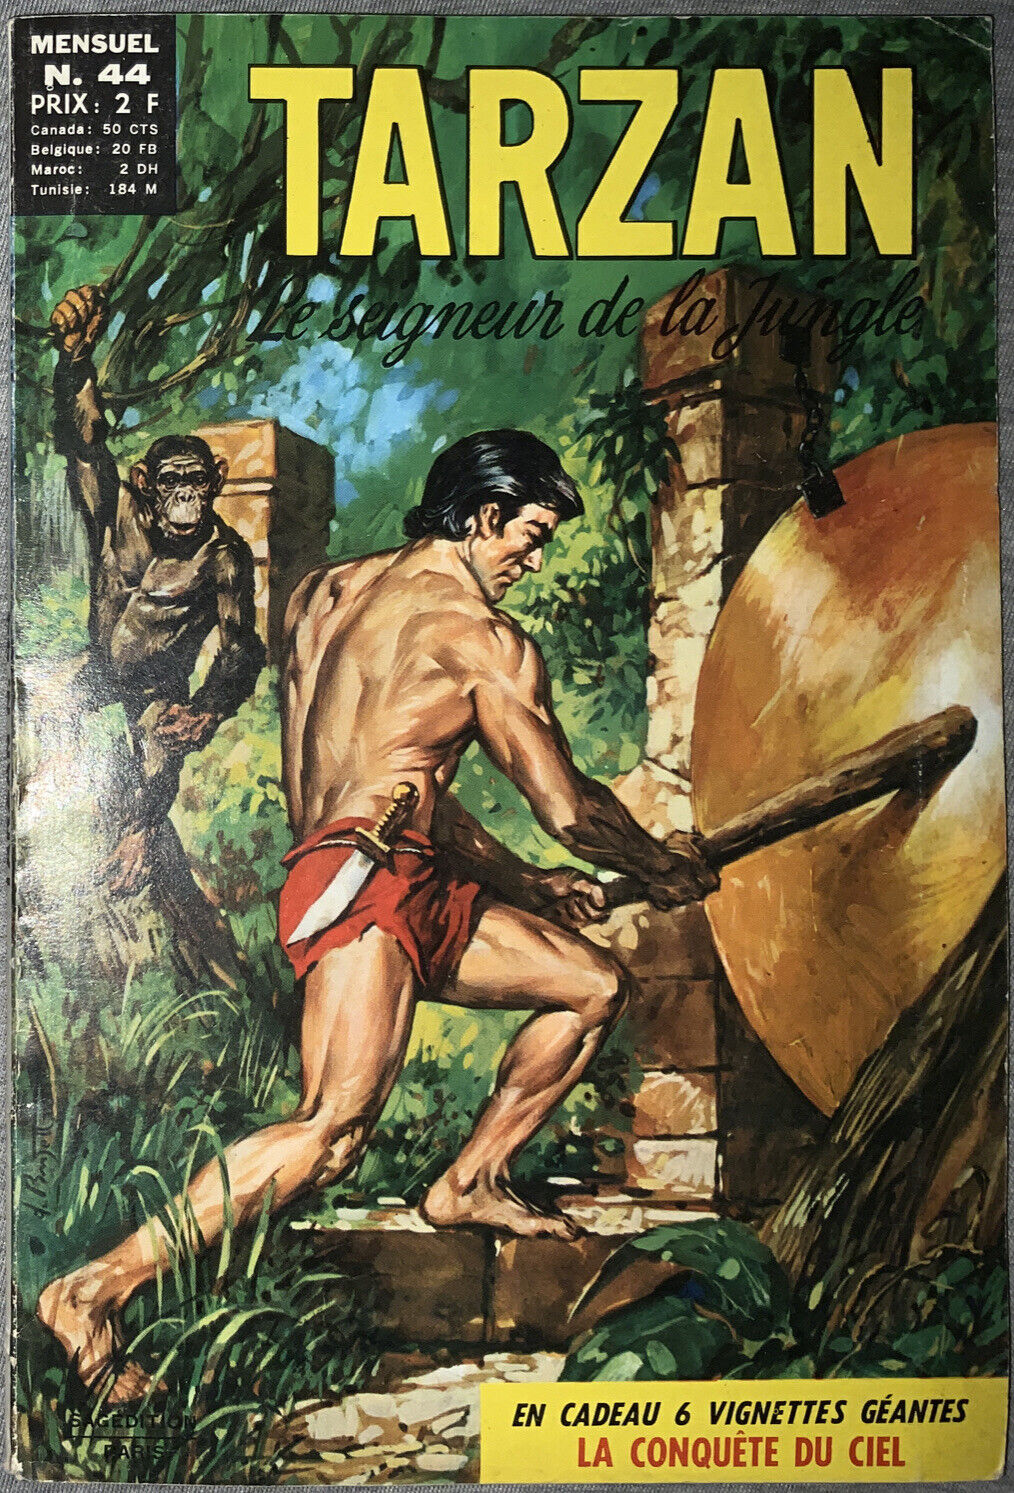 Tarzan, Mensuel #44 [French](Sagédition, 1971)